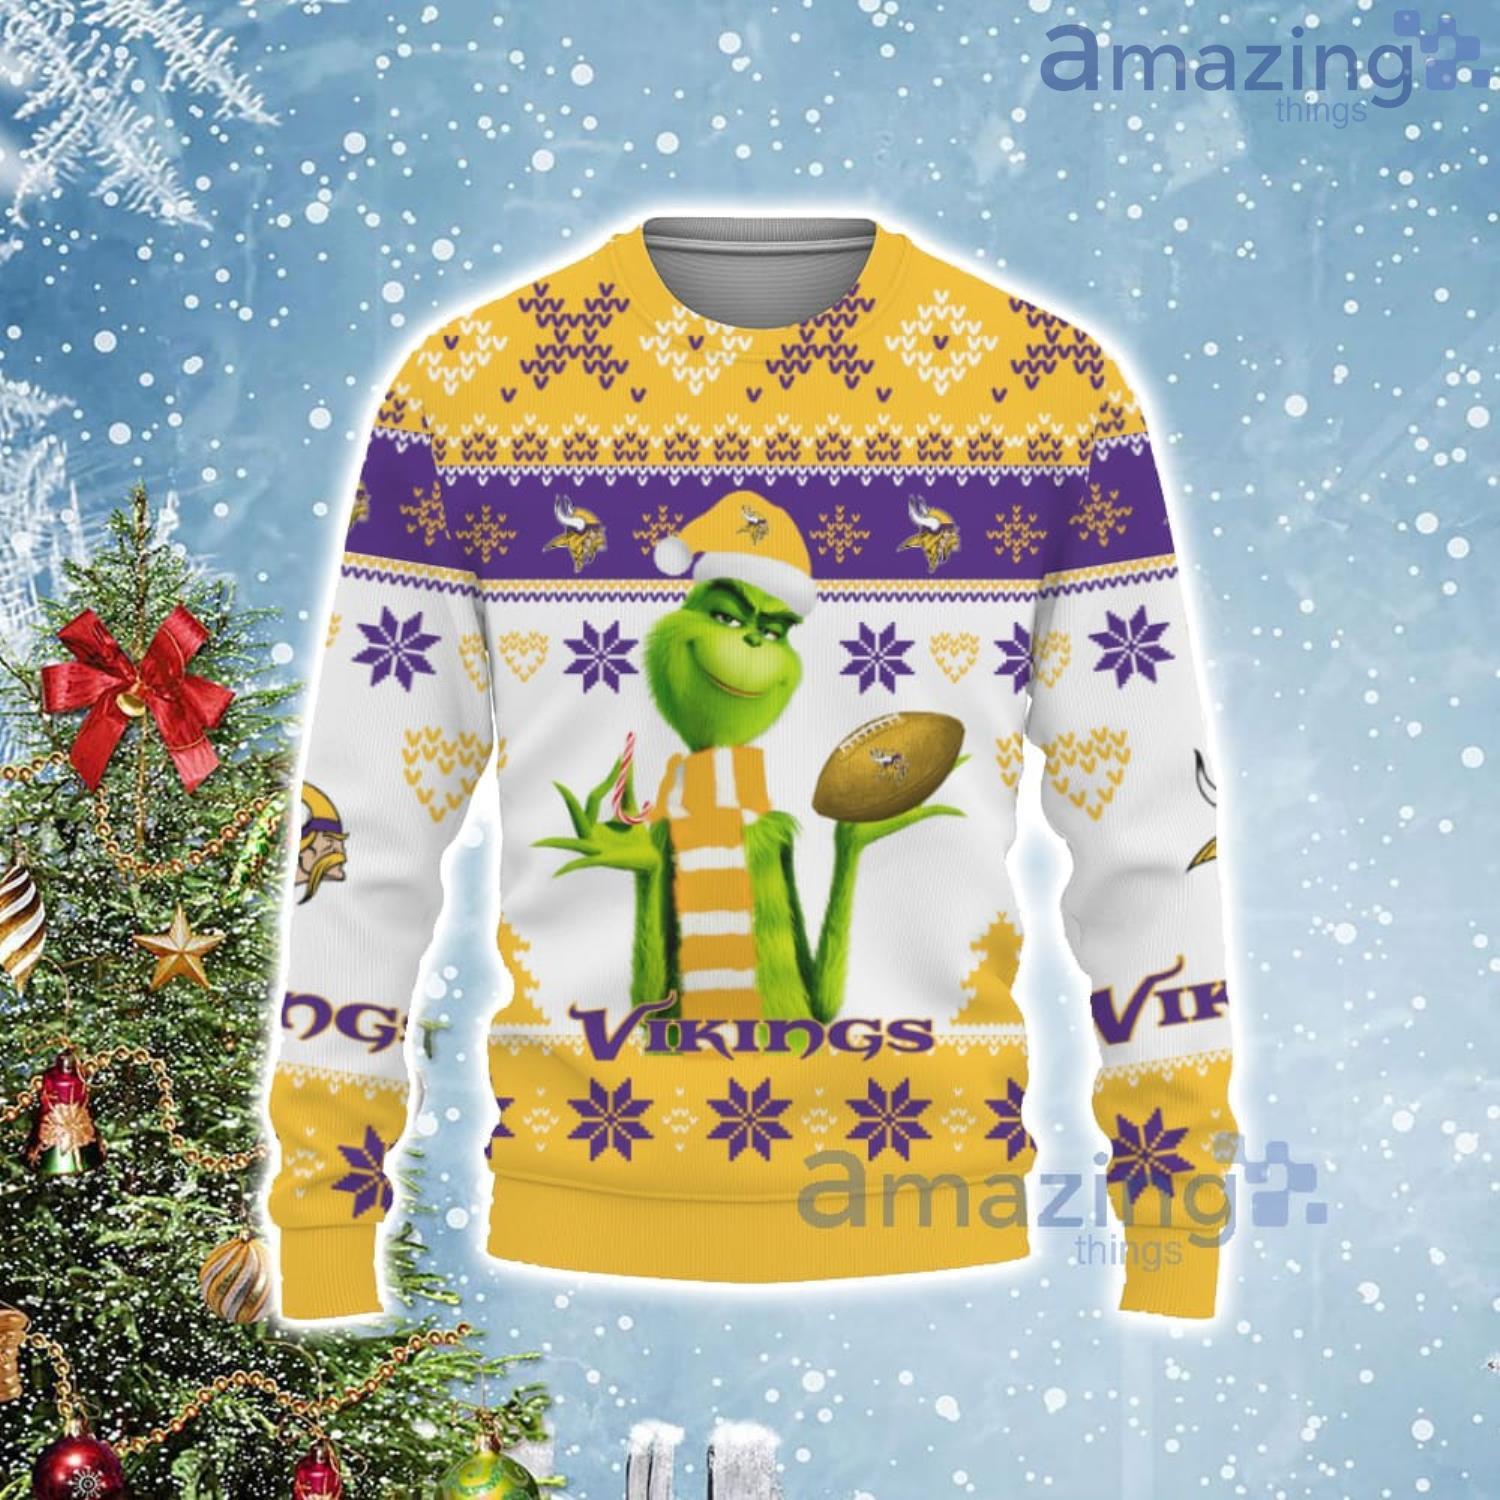 nfl vikings christmas sweater